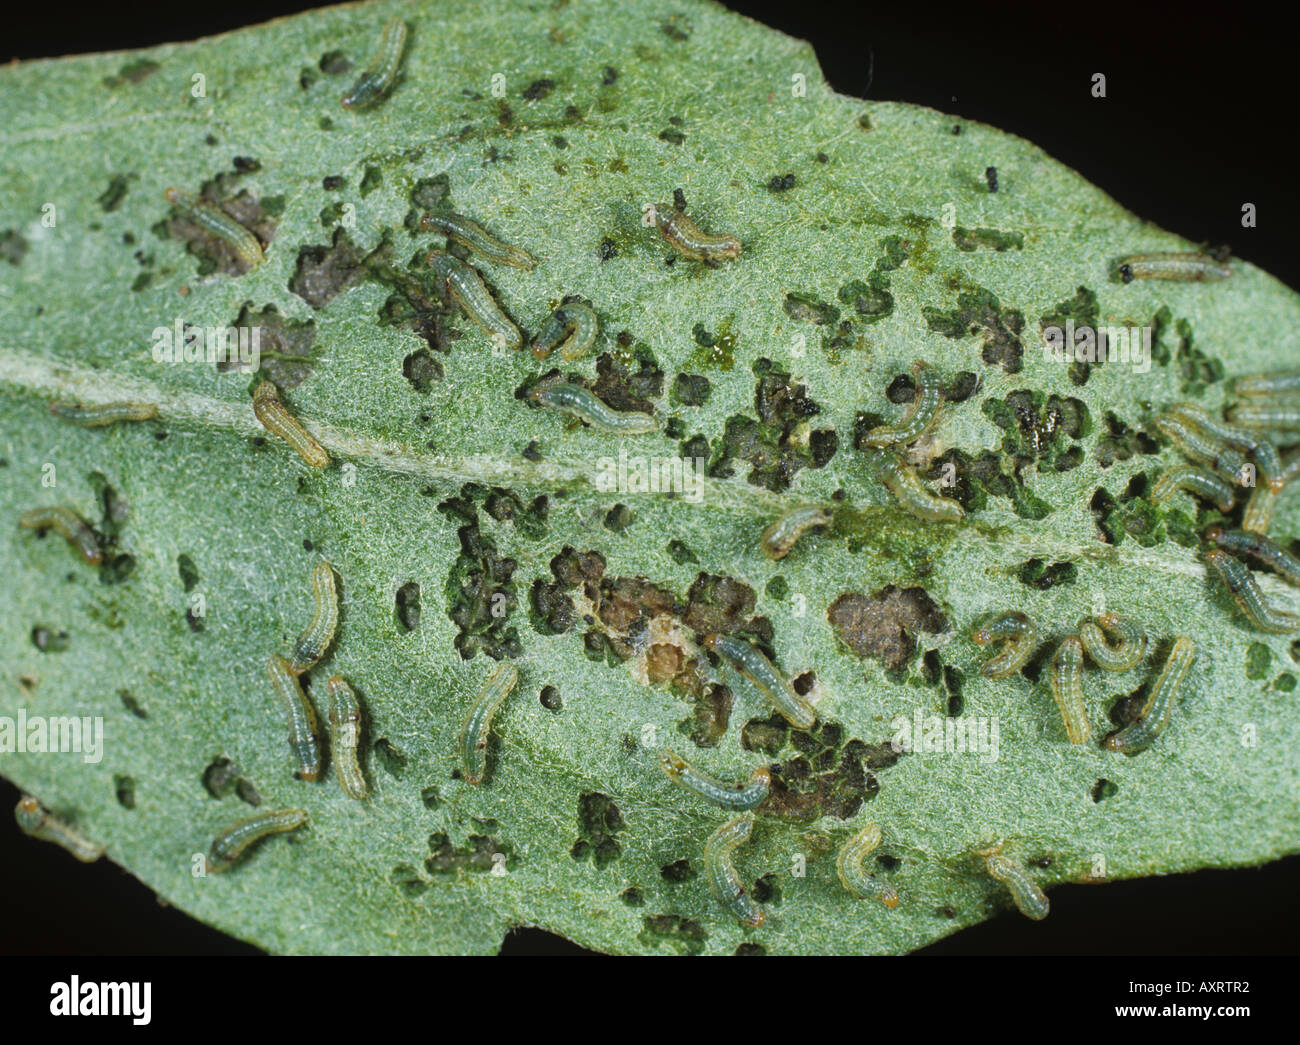 Young armyworm Spodoptera litura caterpillars damaging a Chrysanthemum leaf Stock Photo